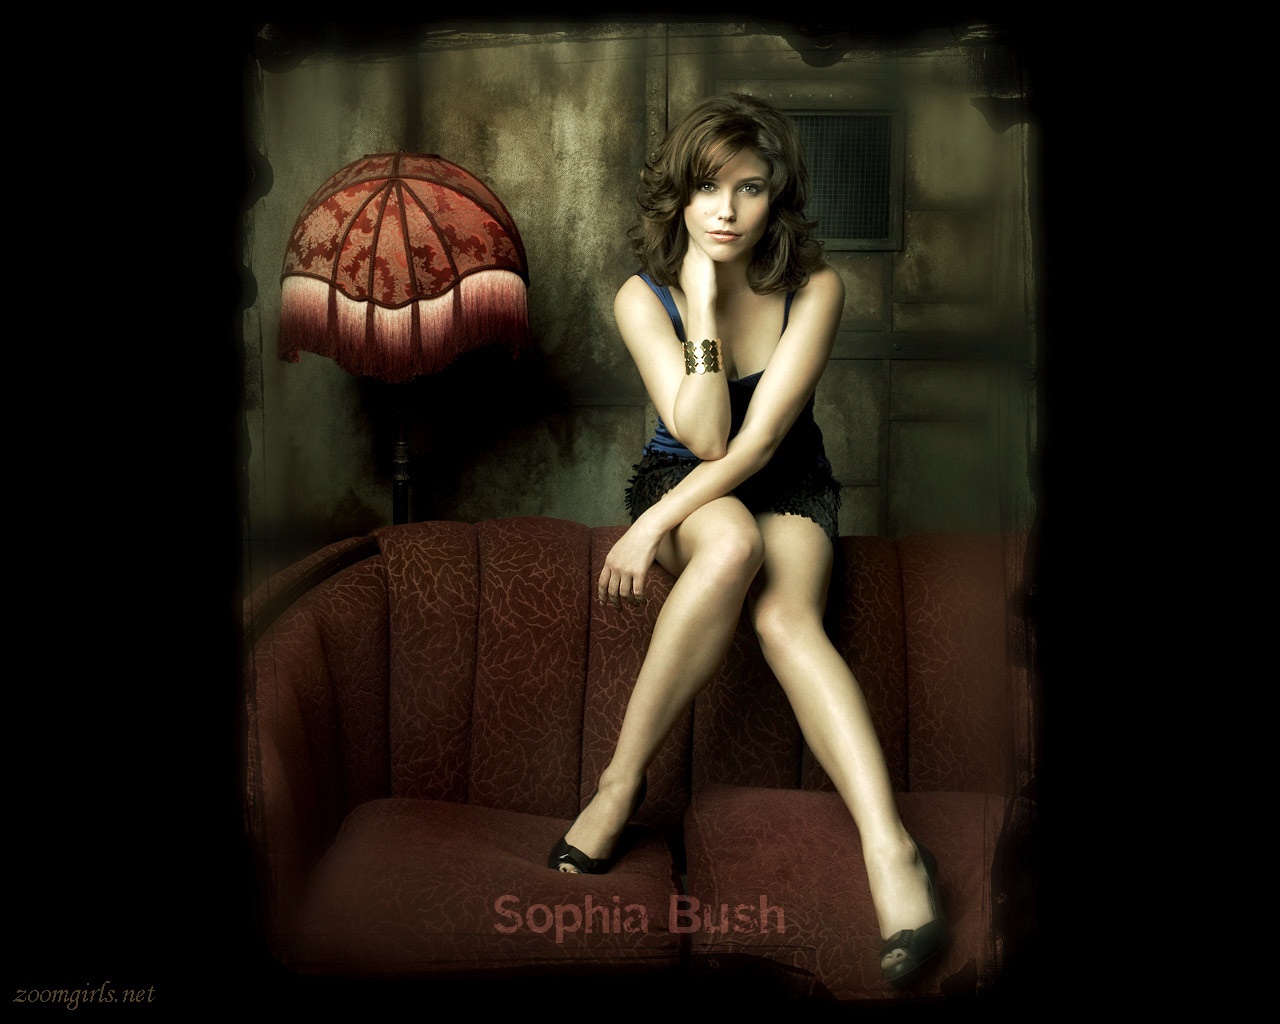 Sophia Bush sexy celebrity actress photo shoot for people magazine hot phot...